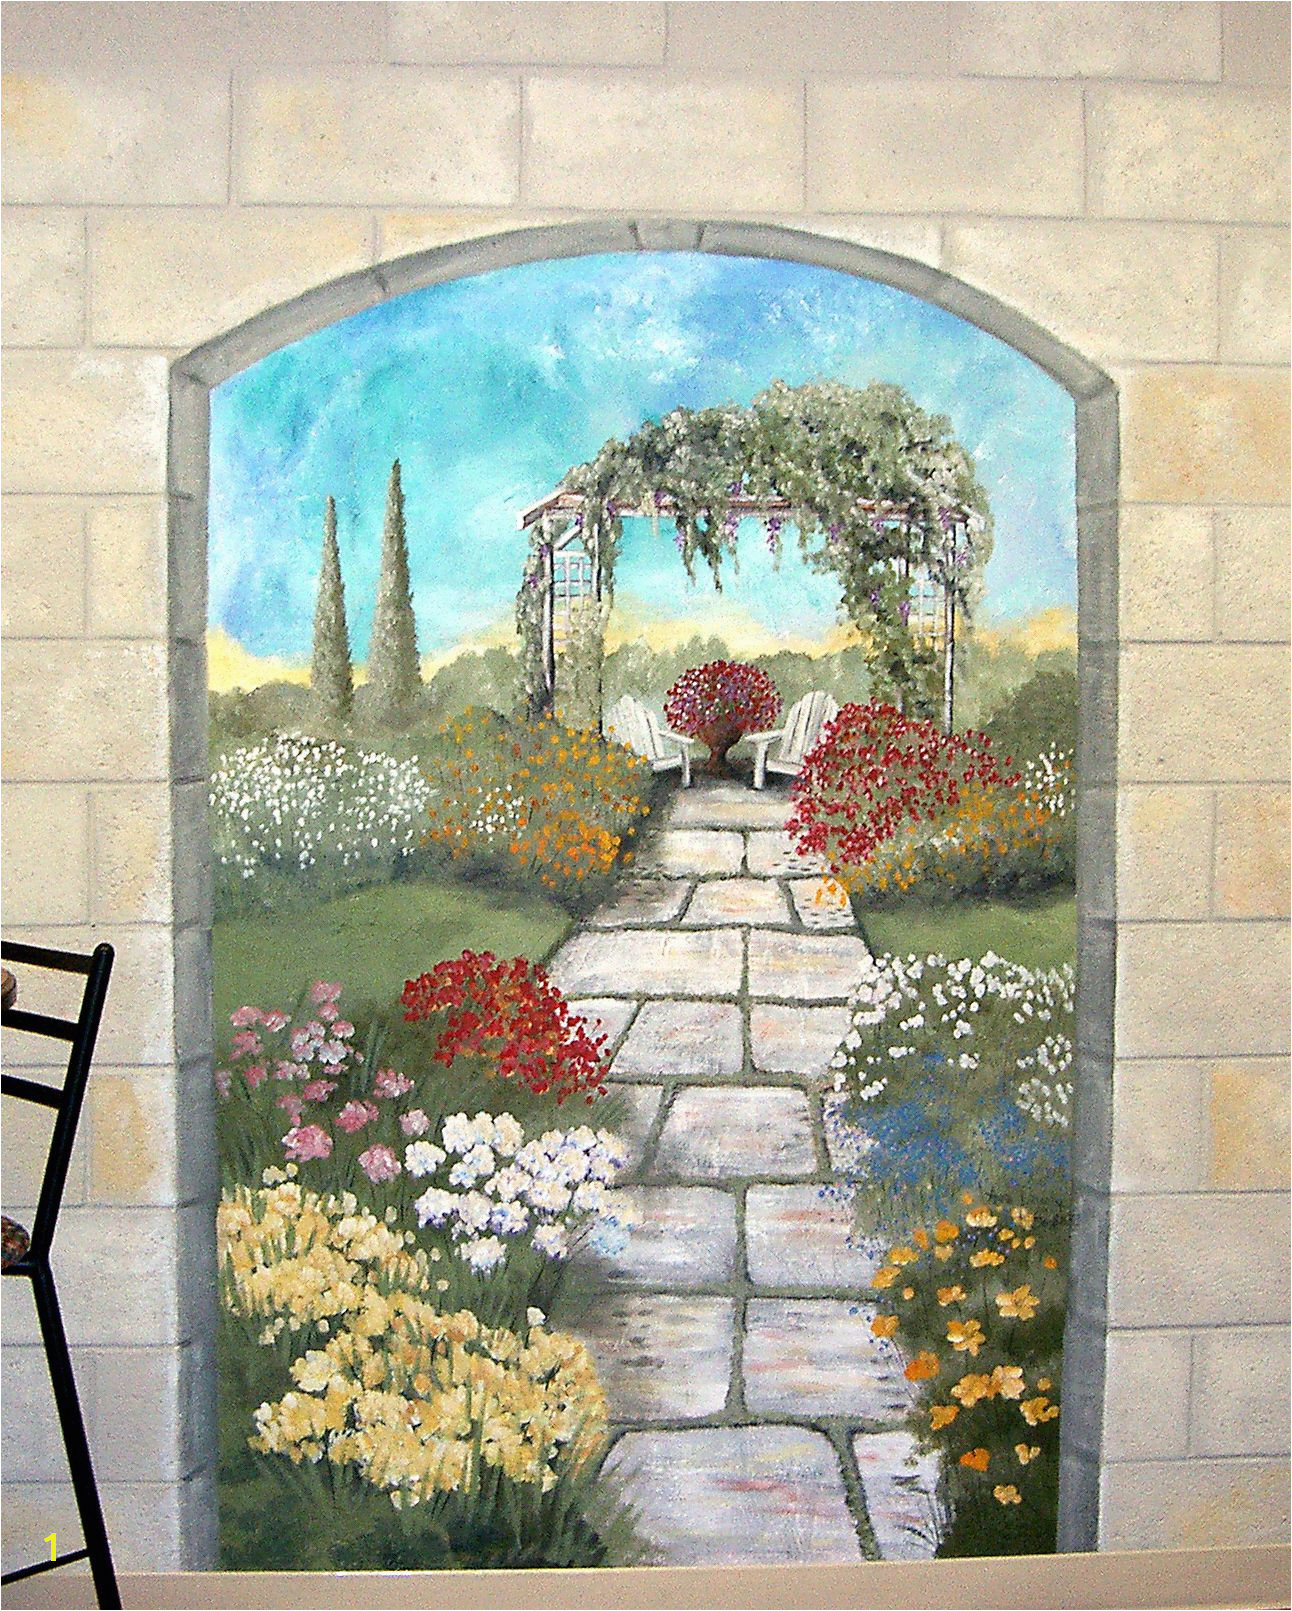 Wall Murals Outdoor Scenes Garden Mural On A Cement Block Wall Colorful Flower Garden Mural